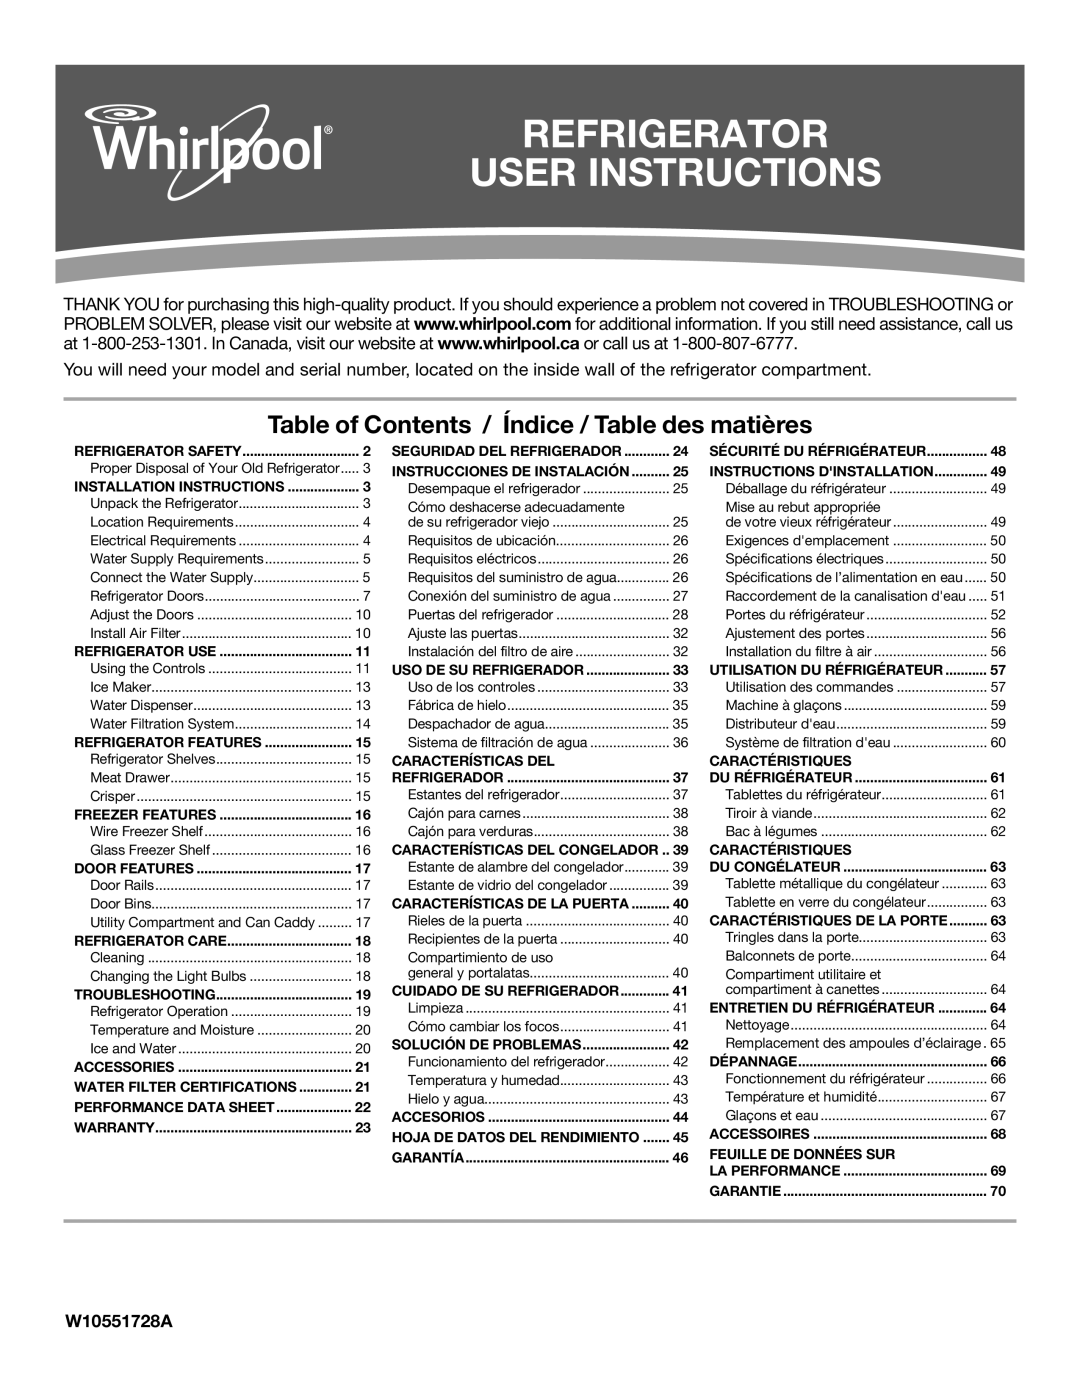 Whirlpool W10551728A installation instructions Refrigerator User Instructions 